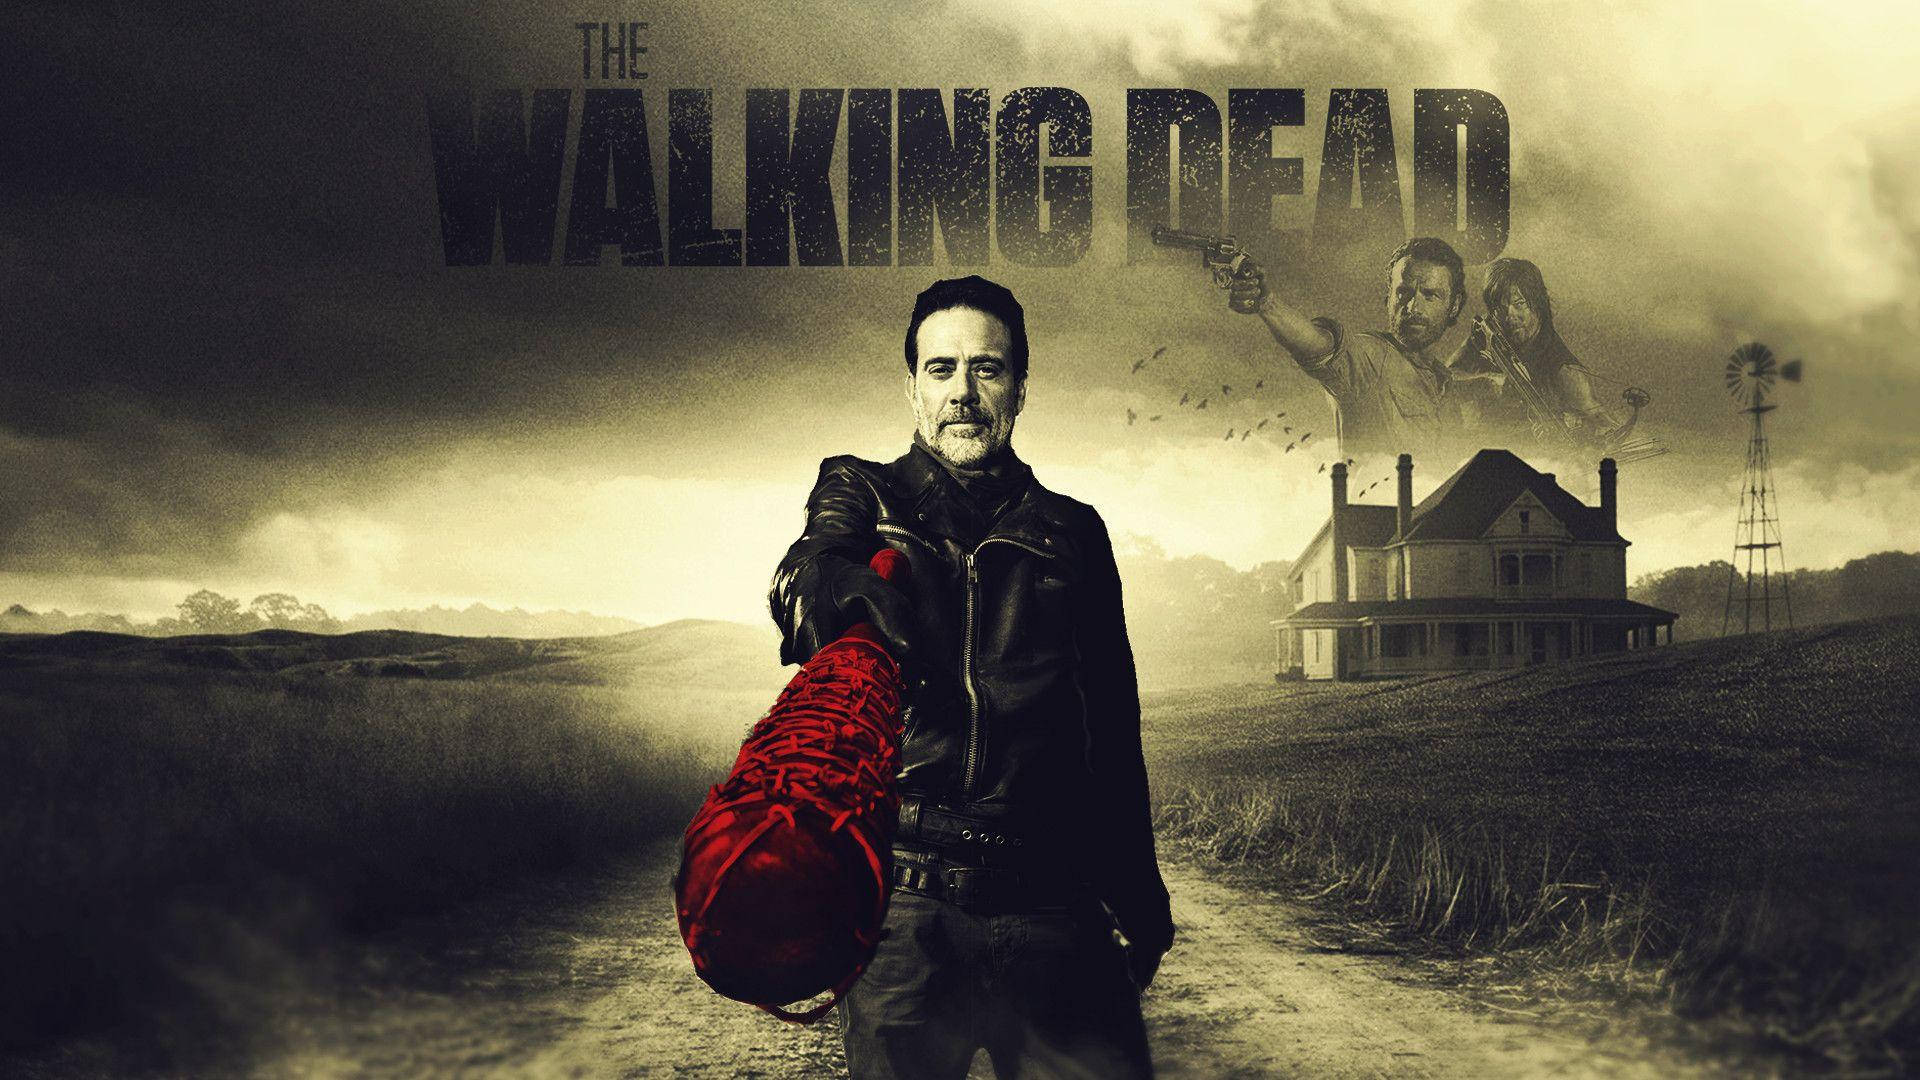 Negan From The Walking Dead Promo